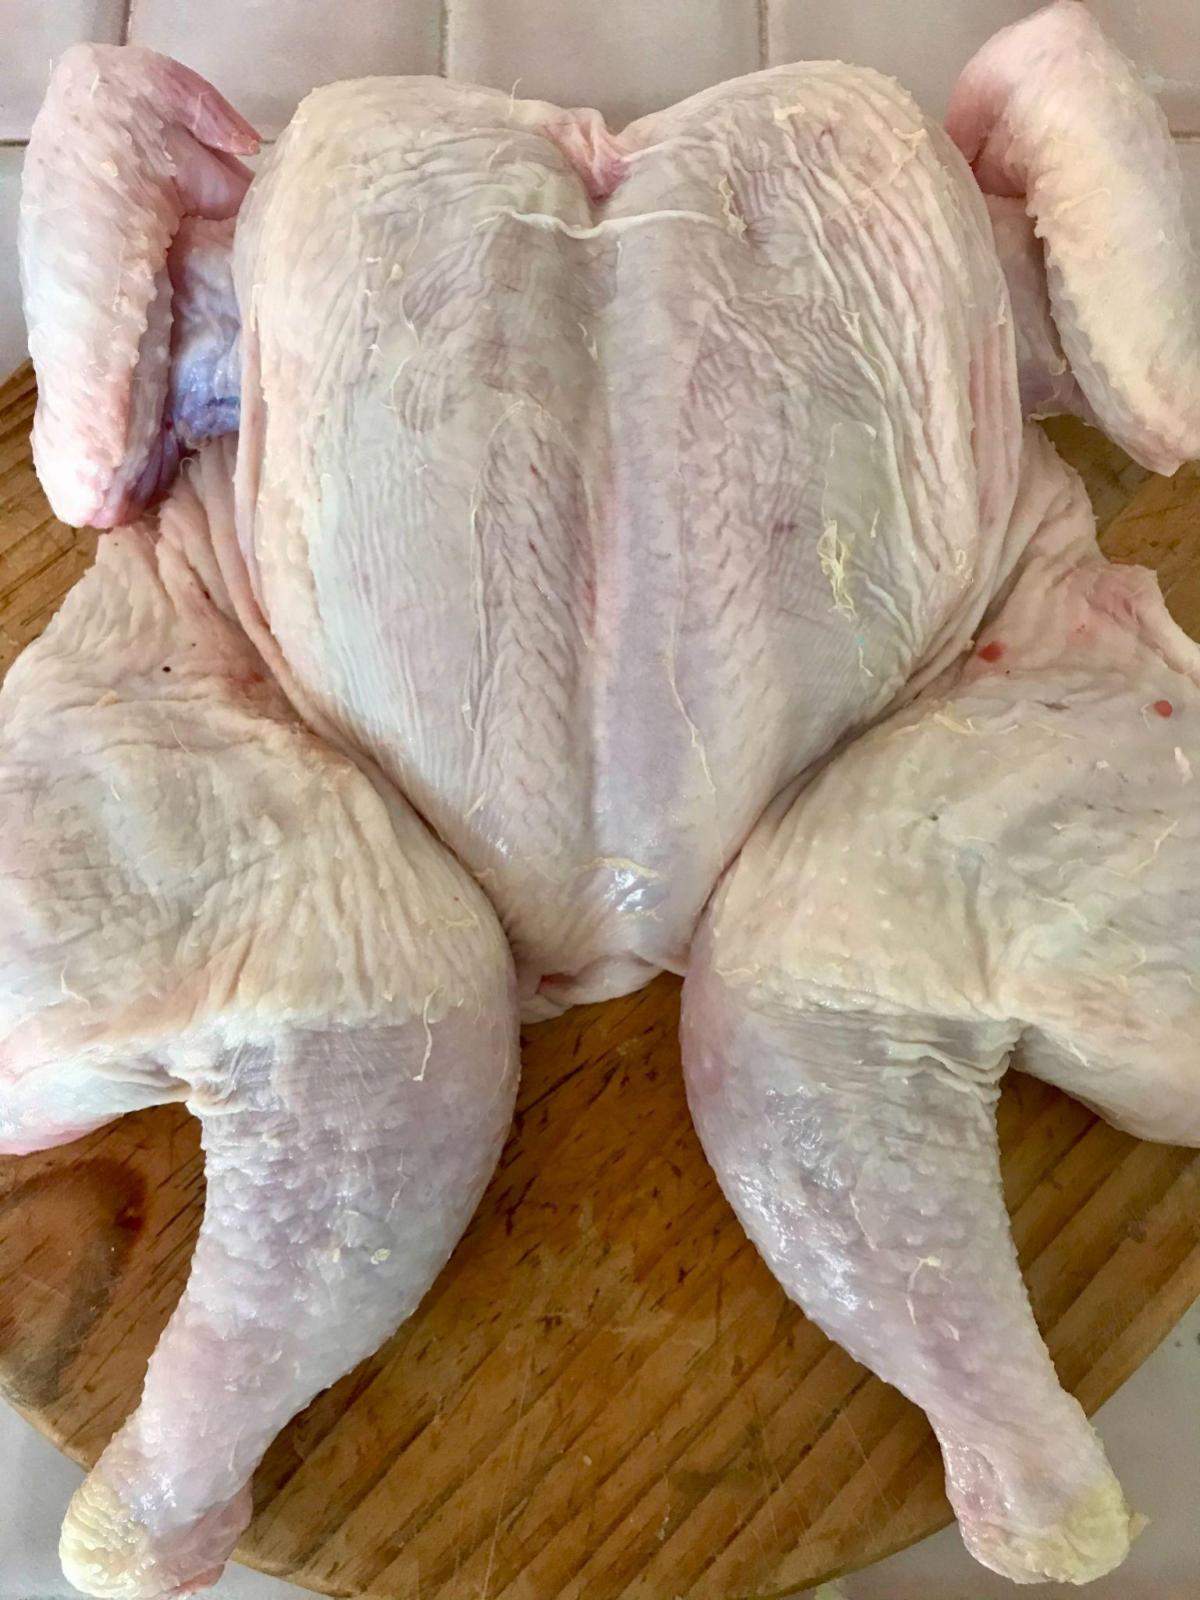 Flattened chicken breast side up.